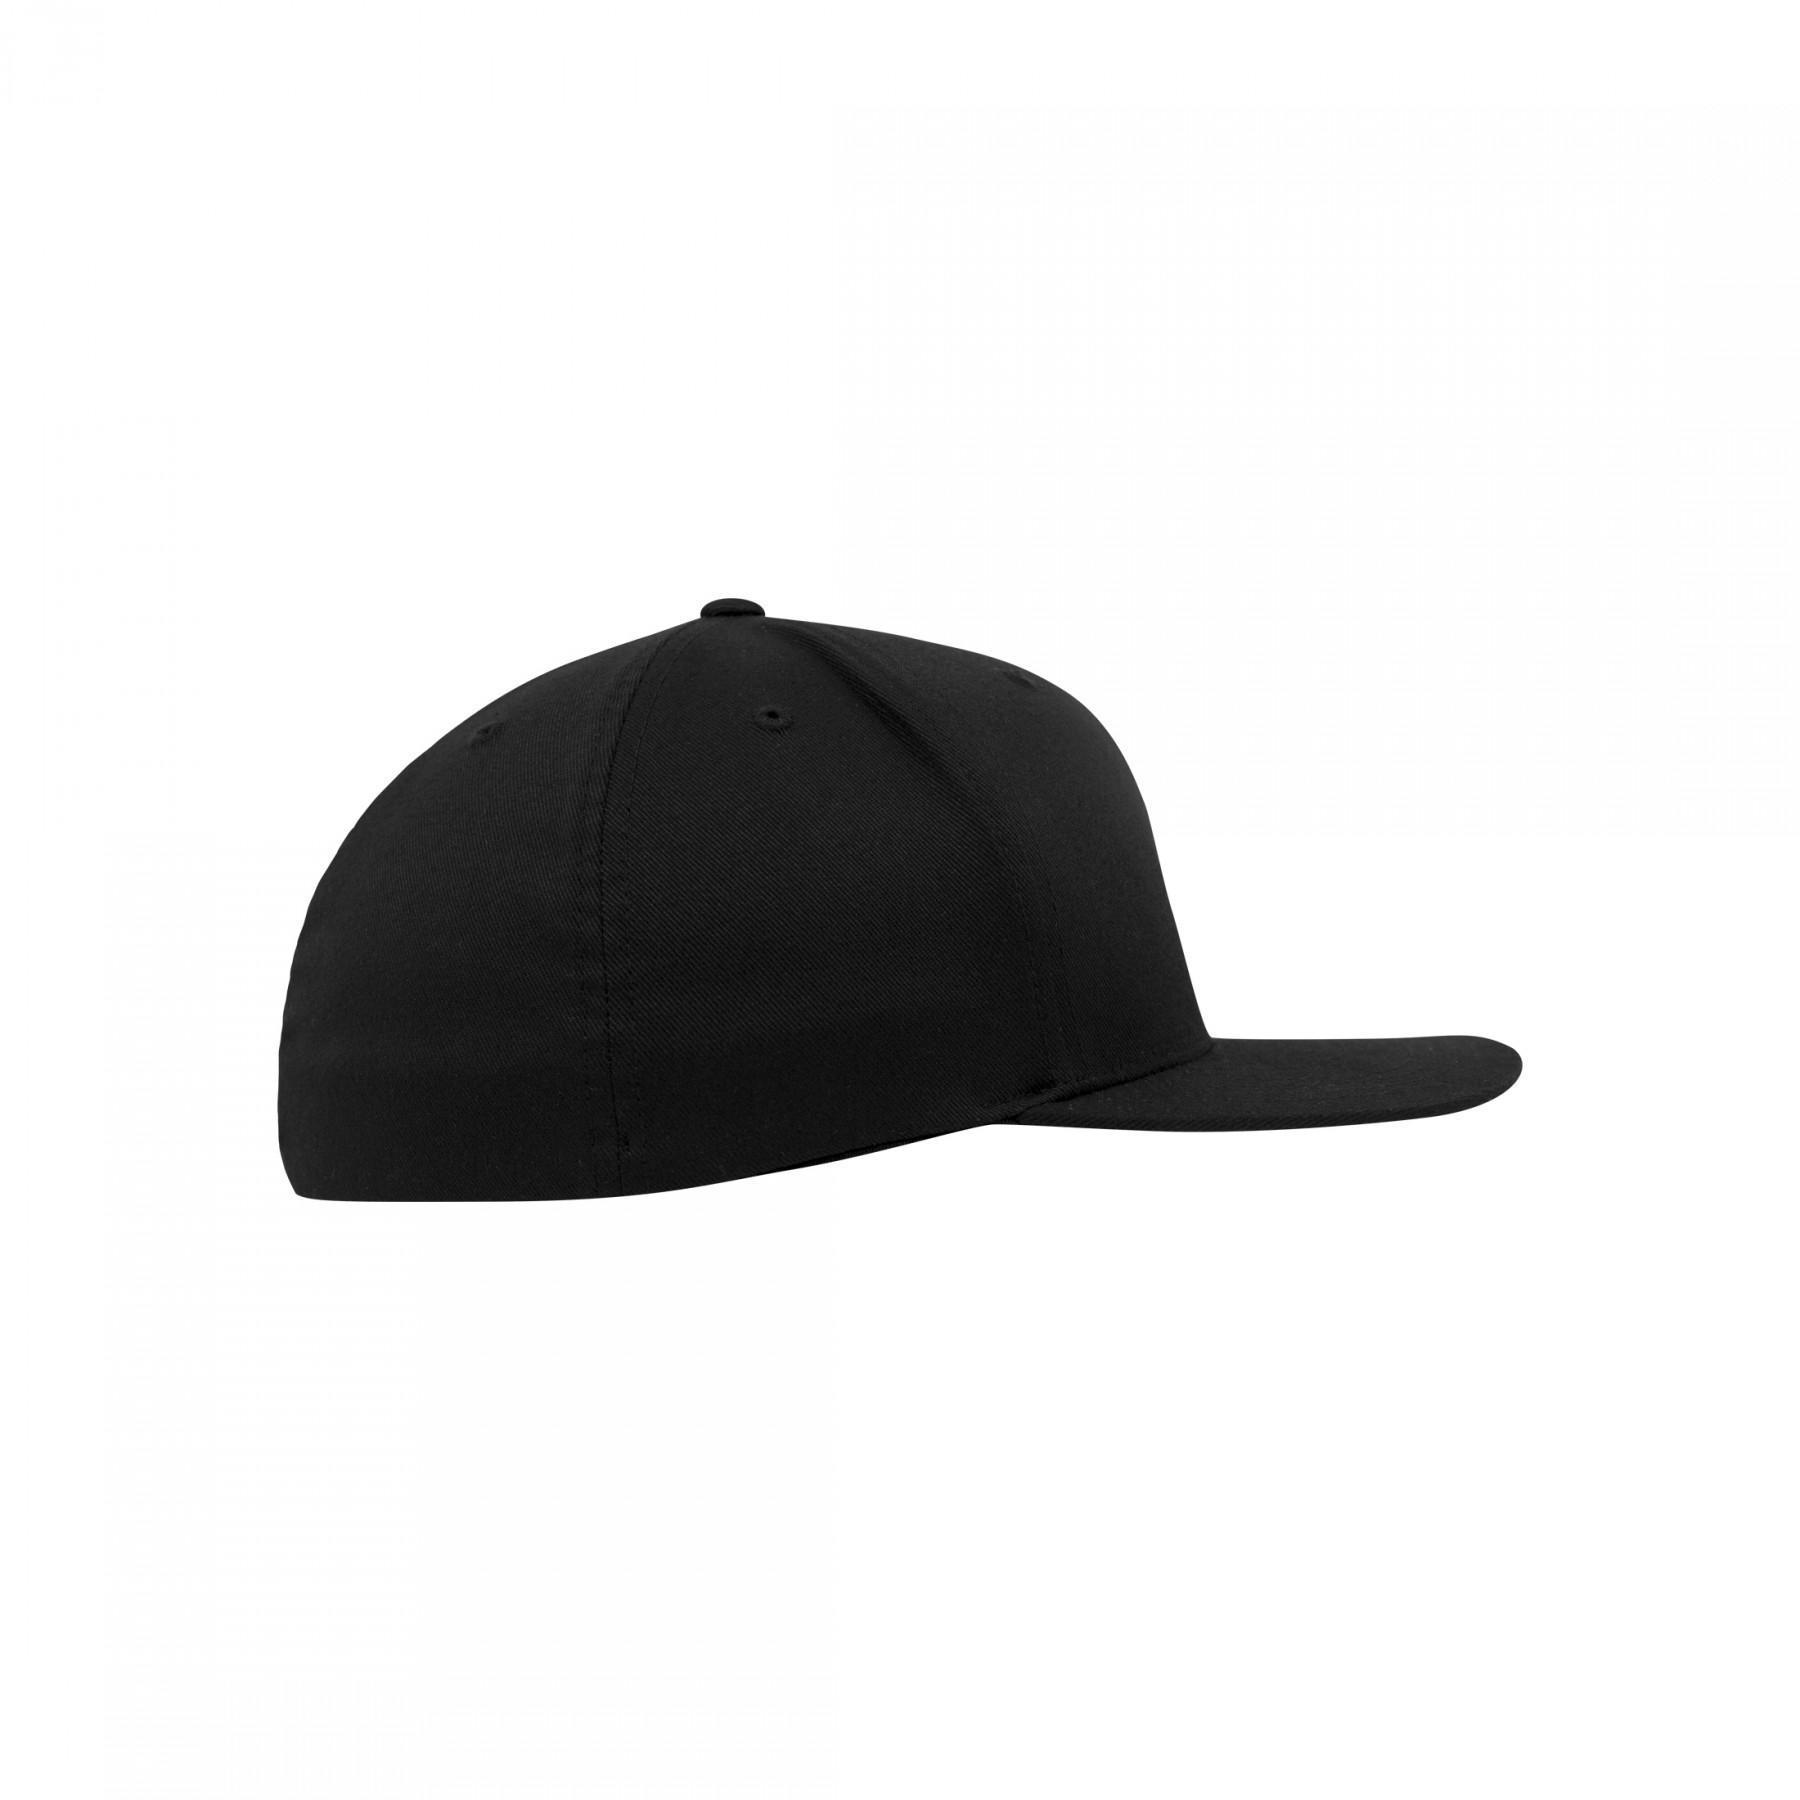 Gorra Flexfit flat visor